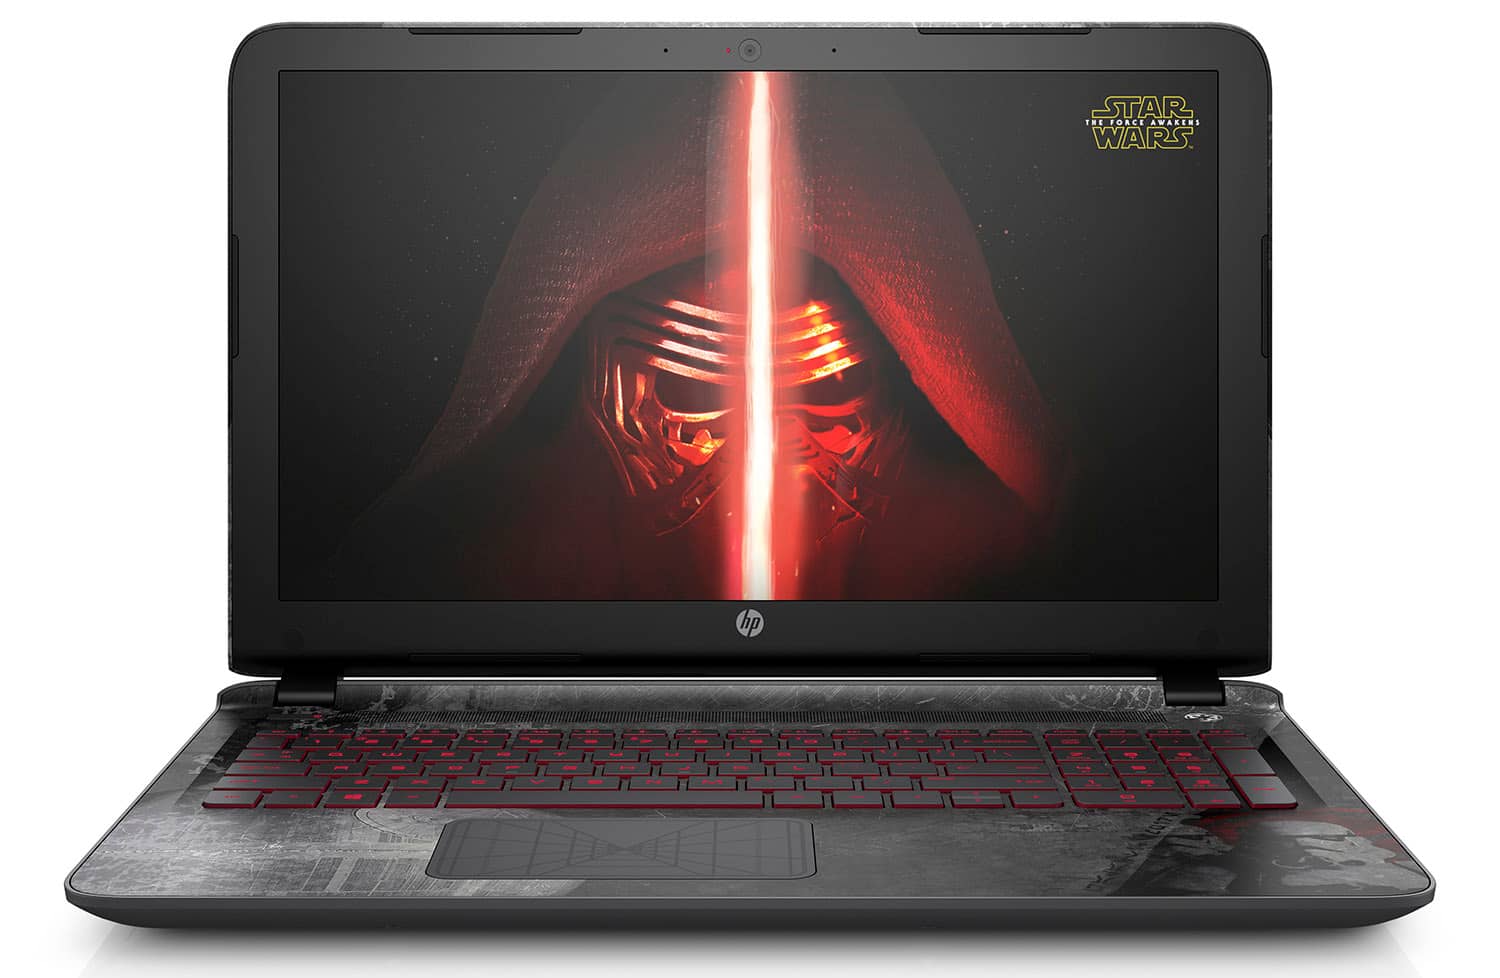 HP Star Wars laptop Front